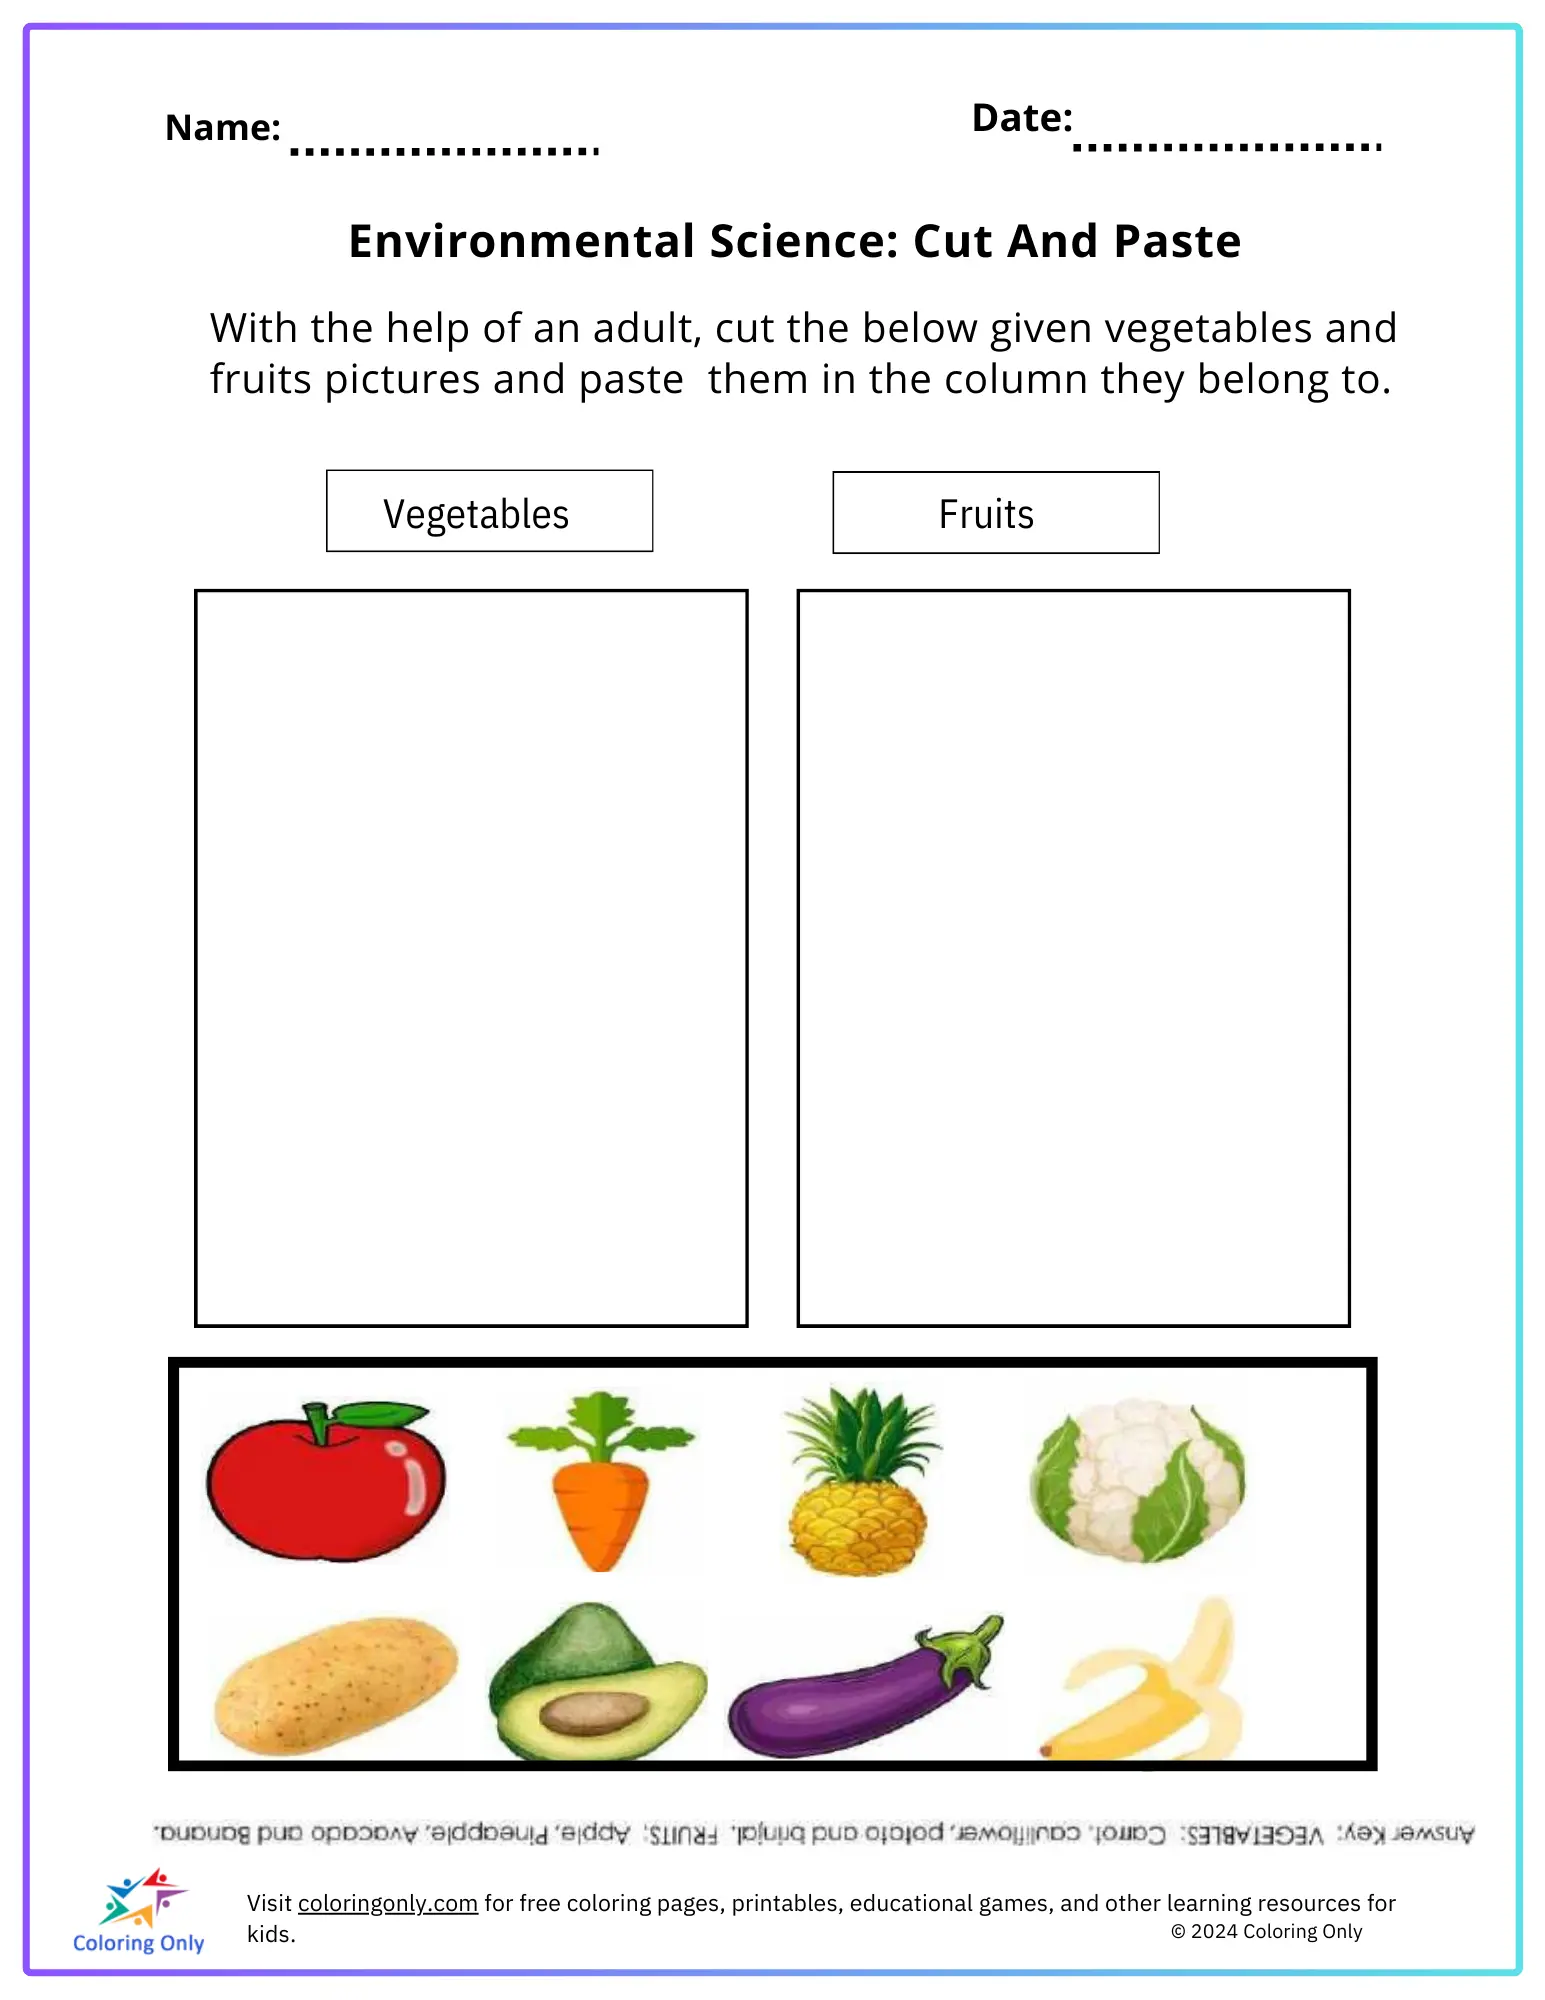 Environmental Science: Cut And Paste Free Printable Worksheet